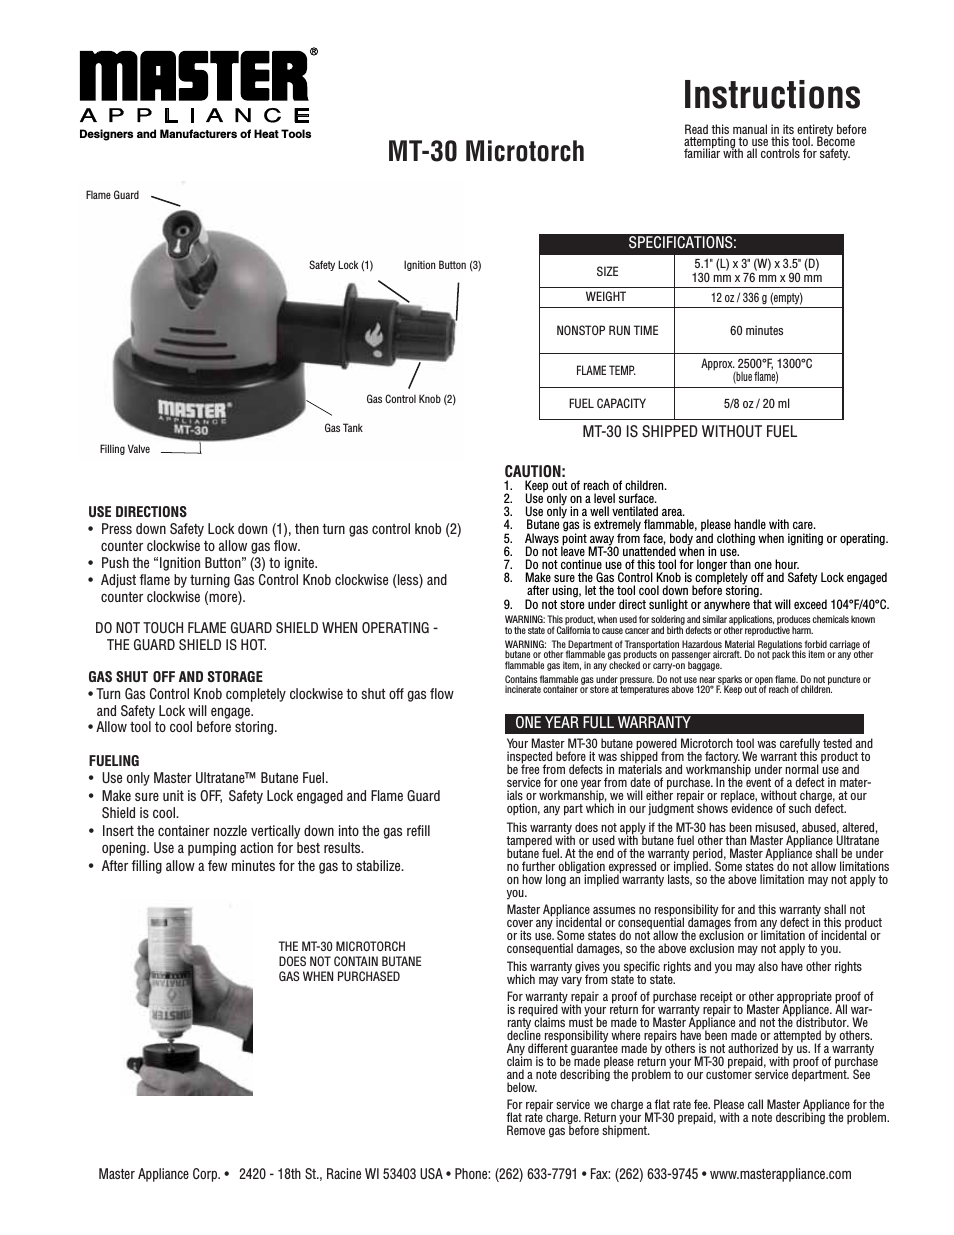 MT-30 Master Microtorch